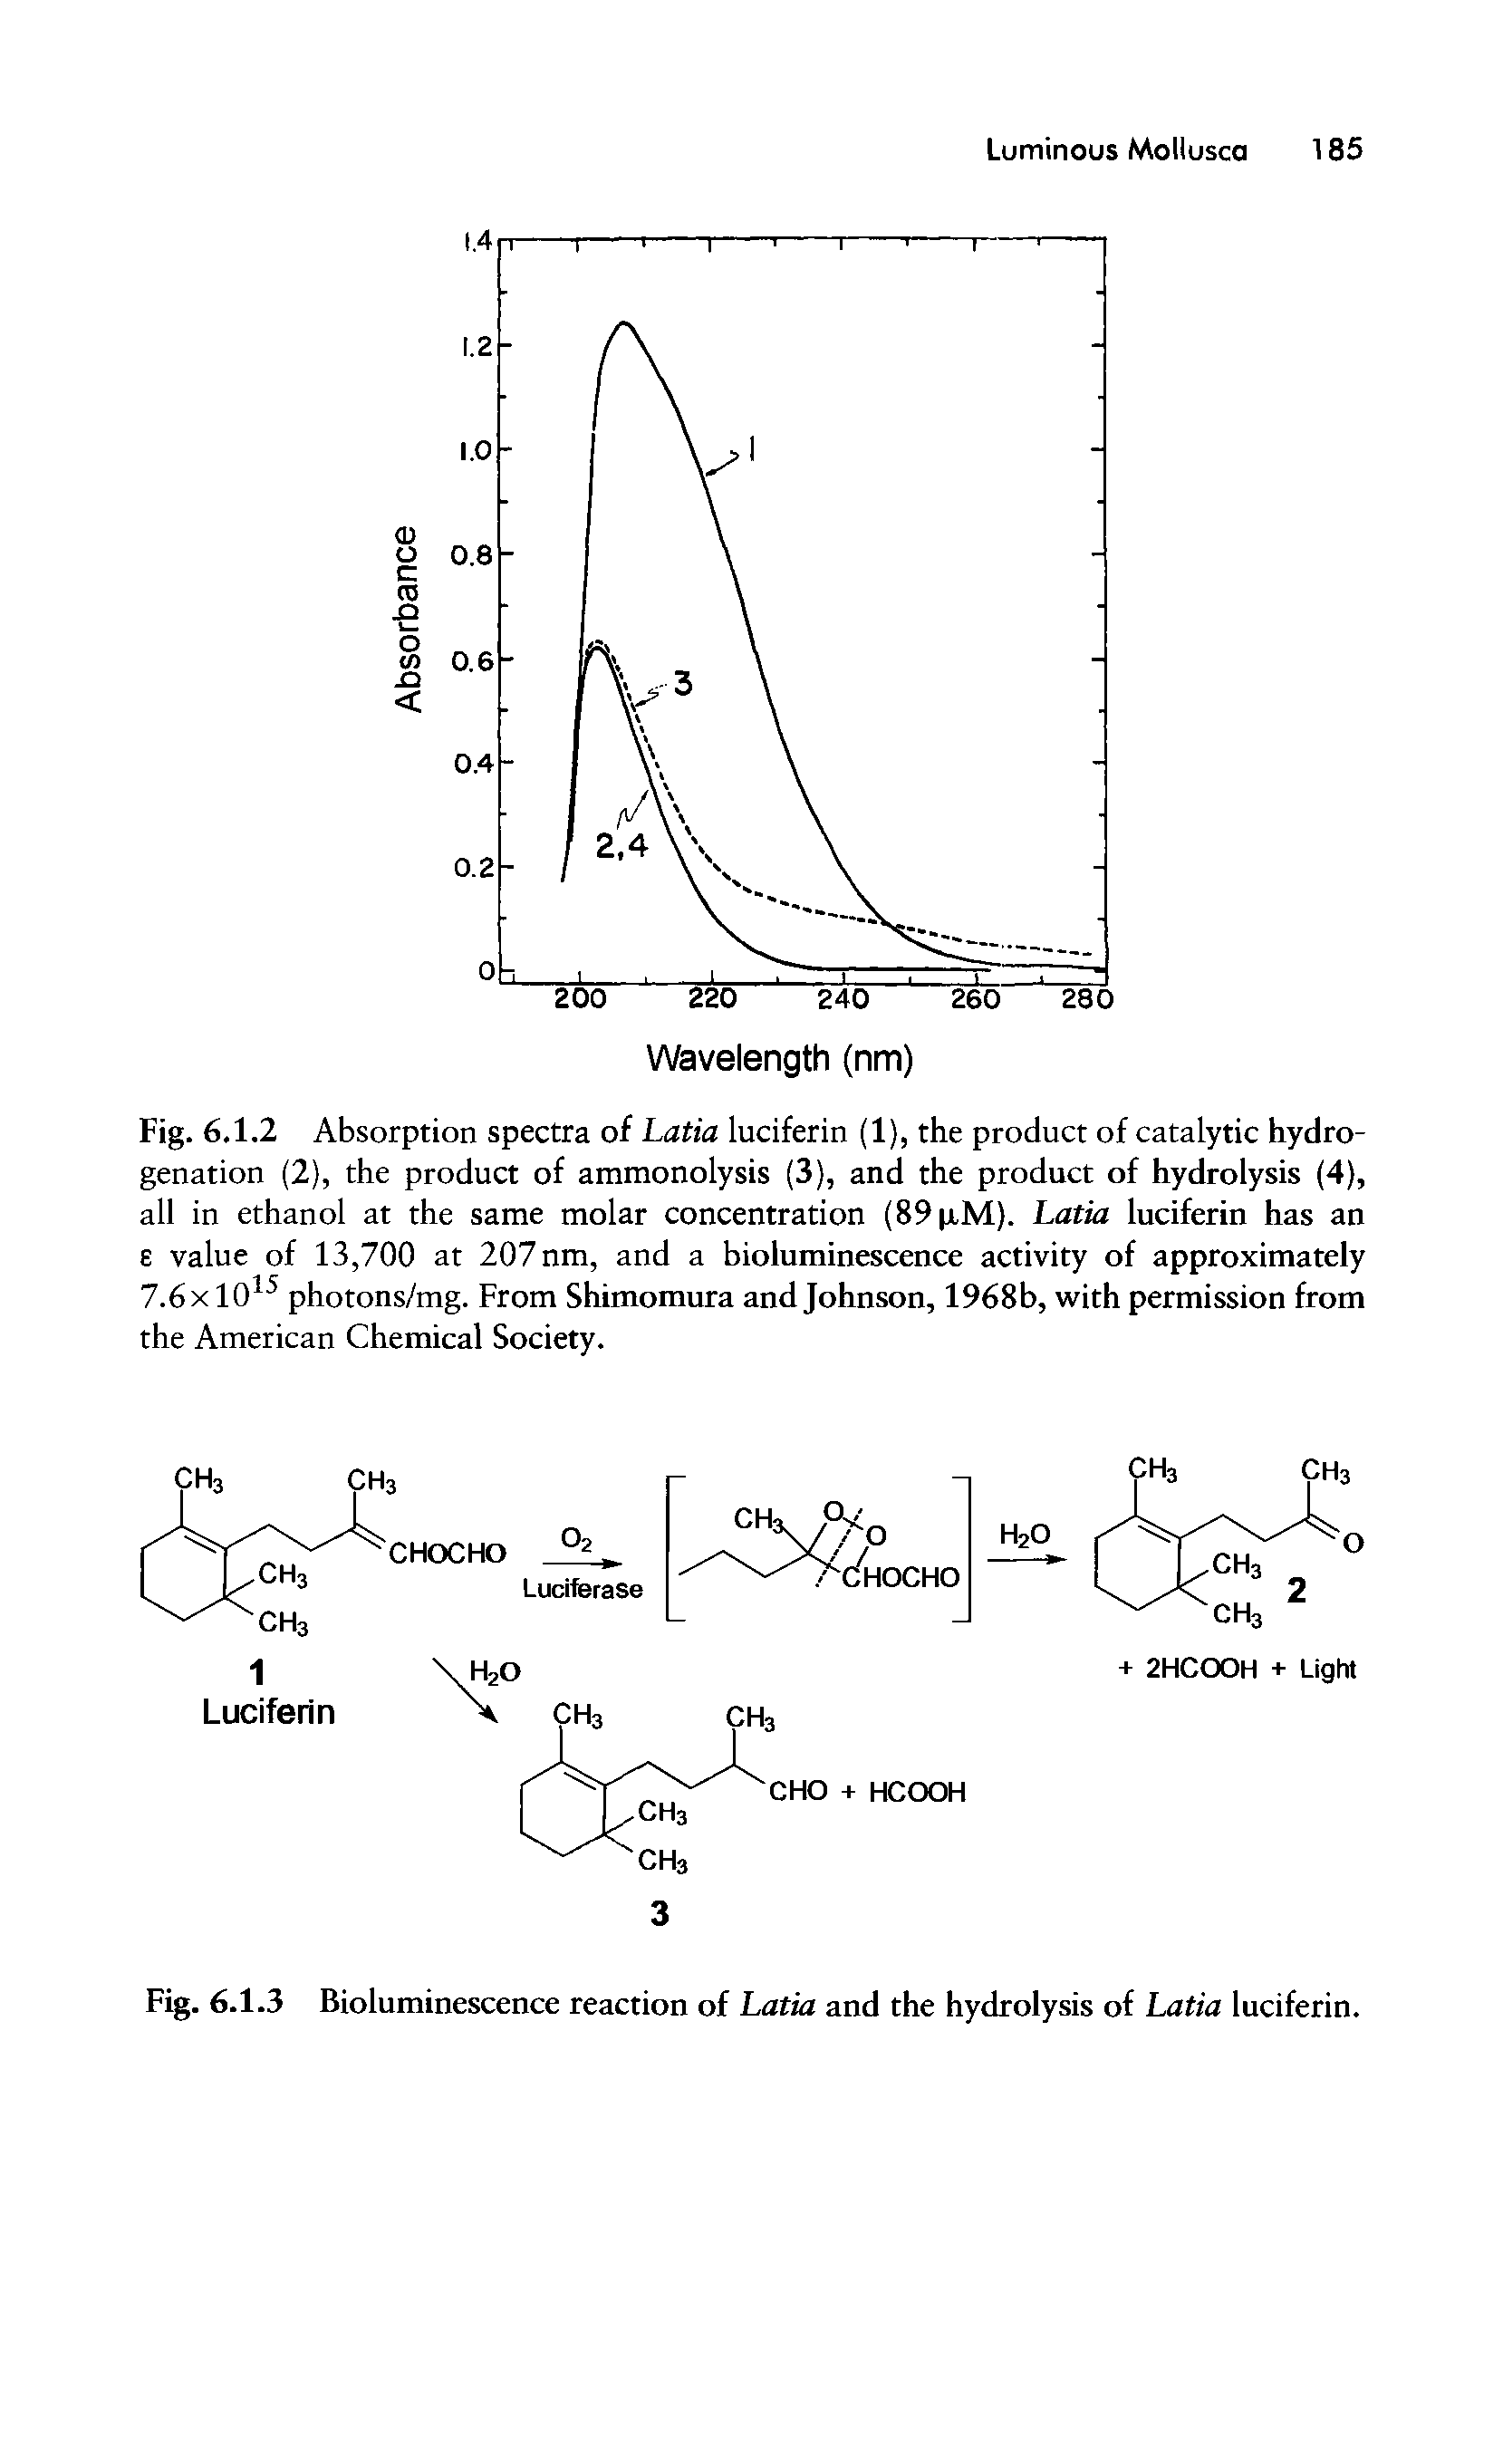 Fig. 6.1.3 Bioluminescence reaction of Latia and the hydrolysis of Latia luciferin.